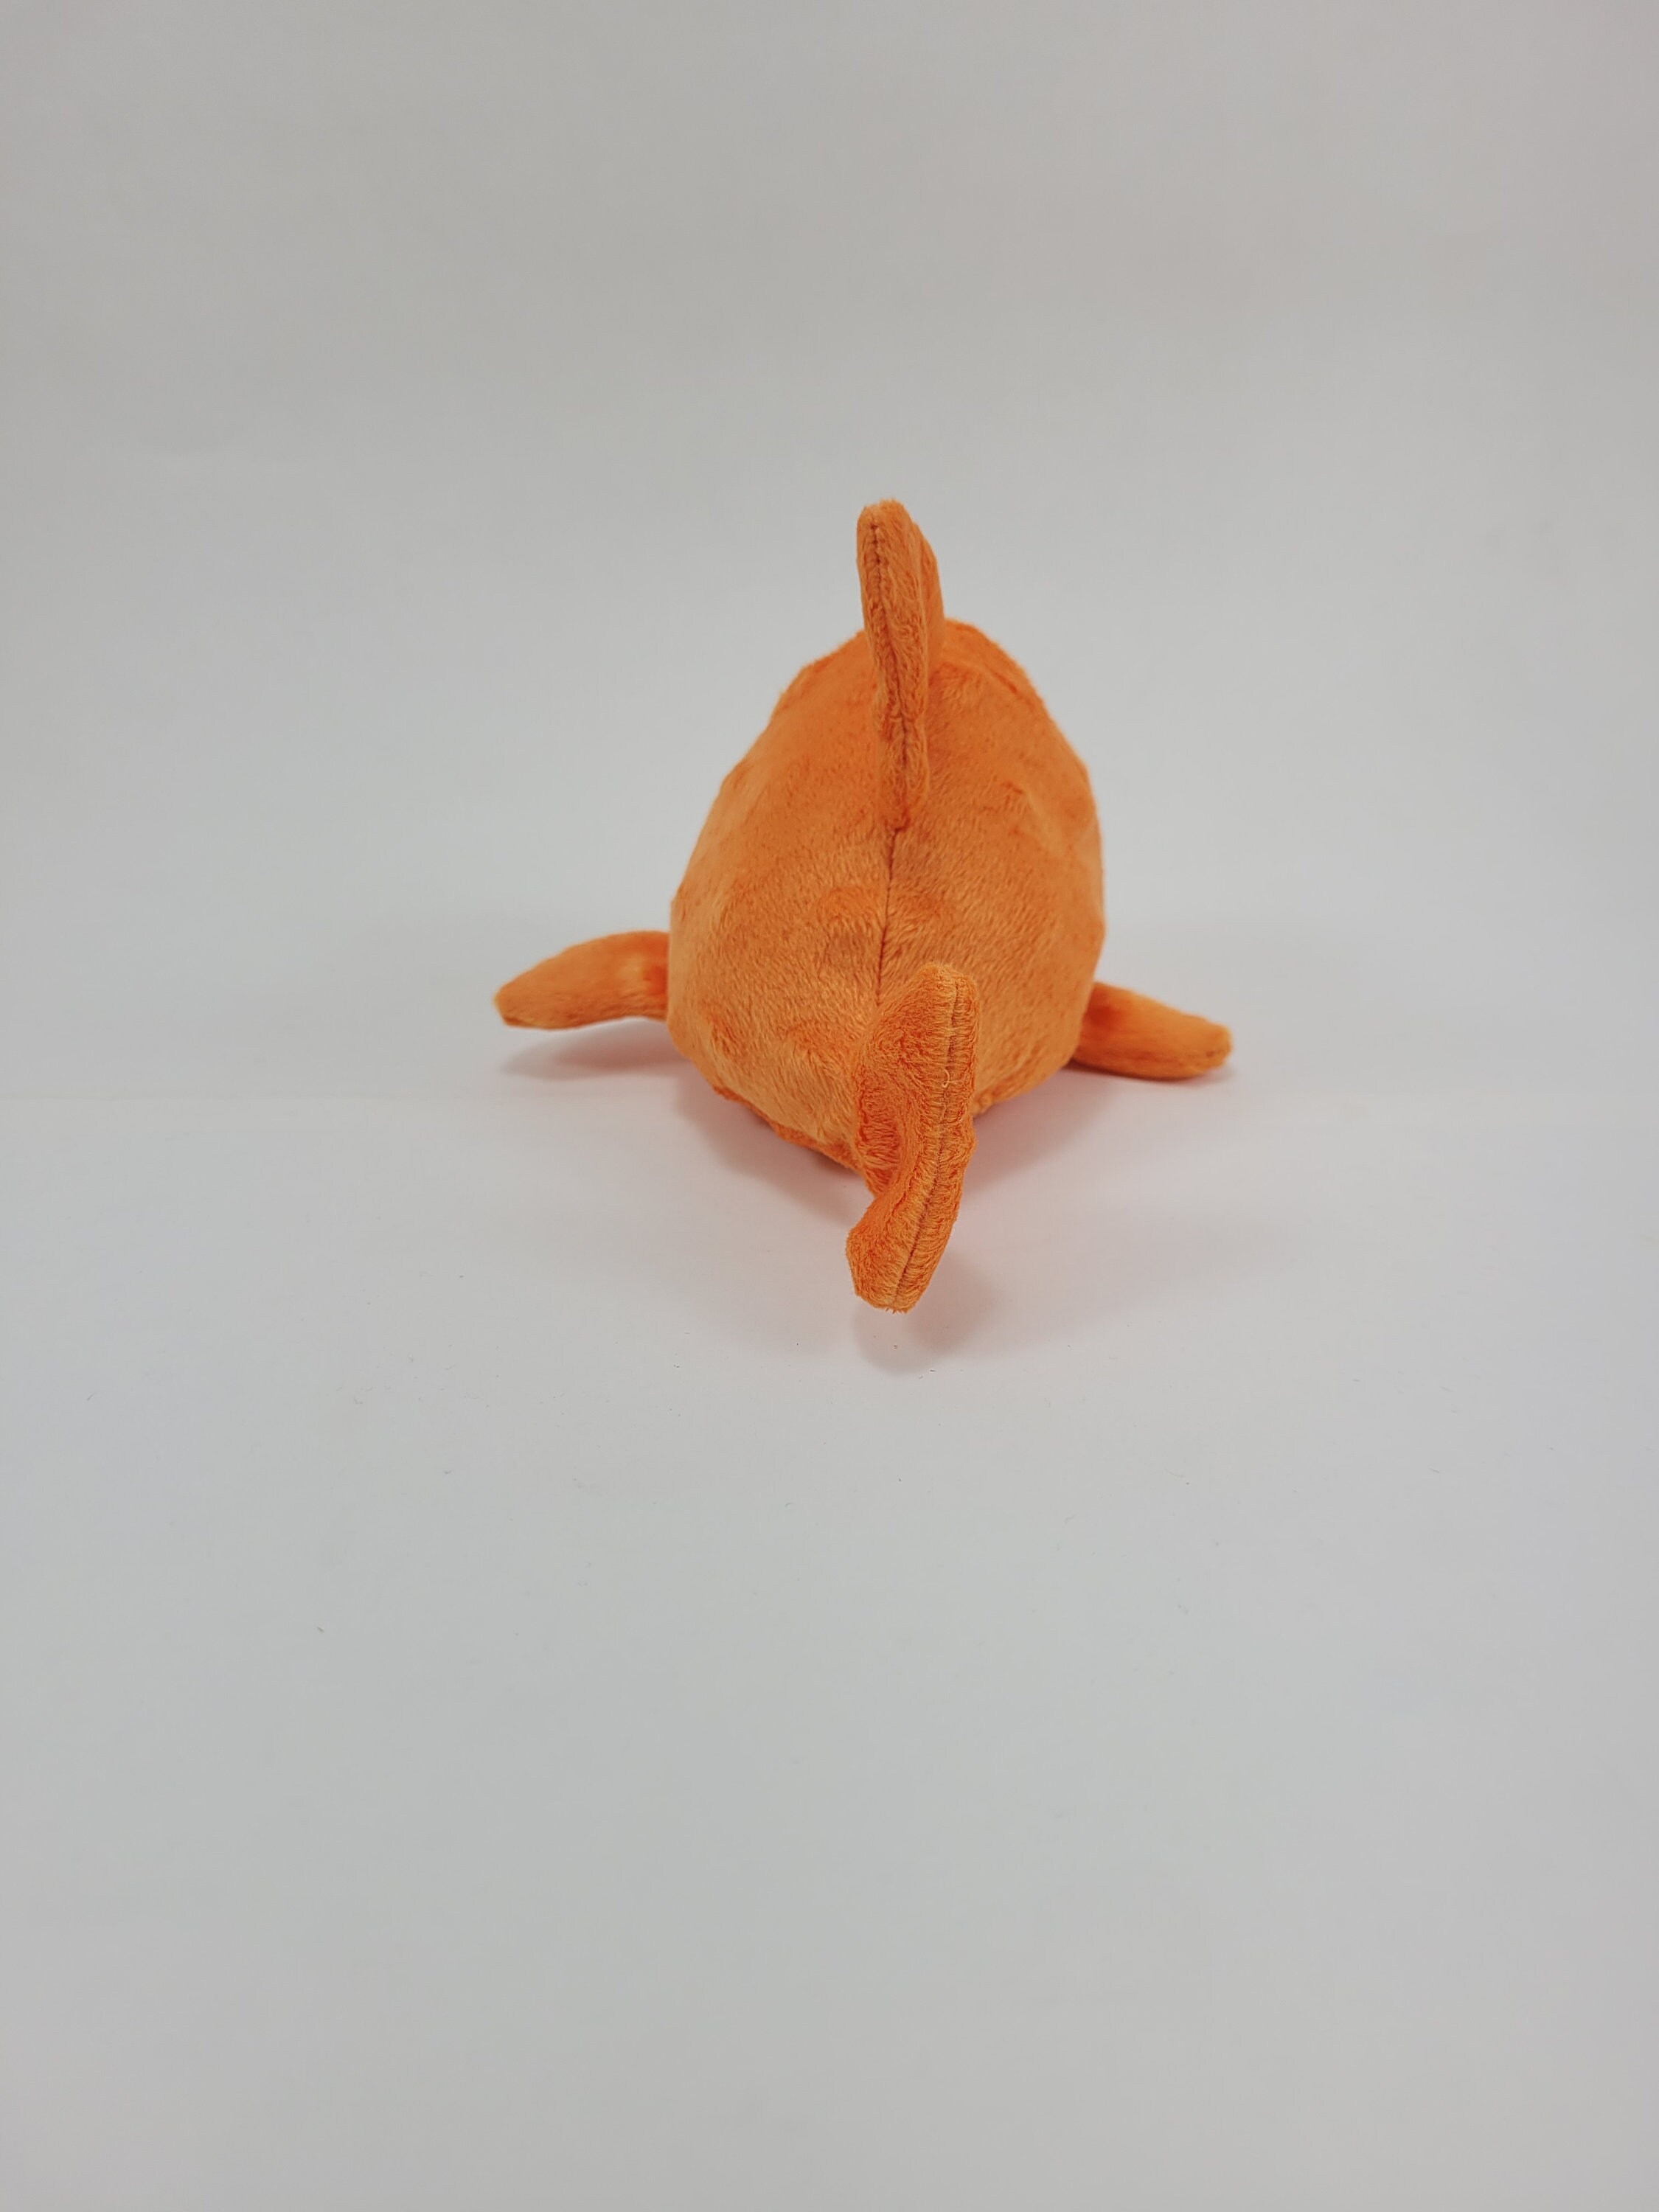 Goldfish Blob Plushie 